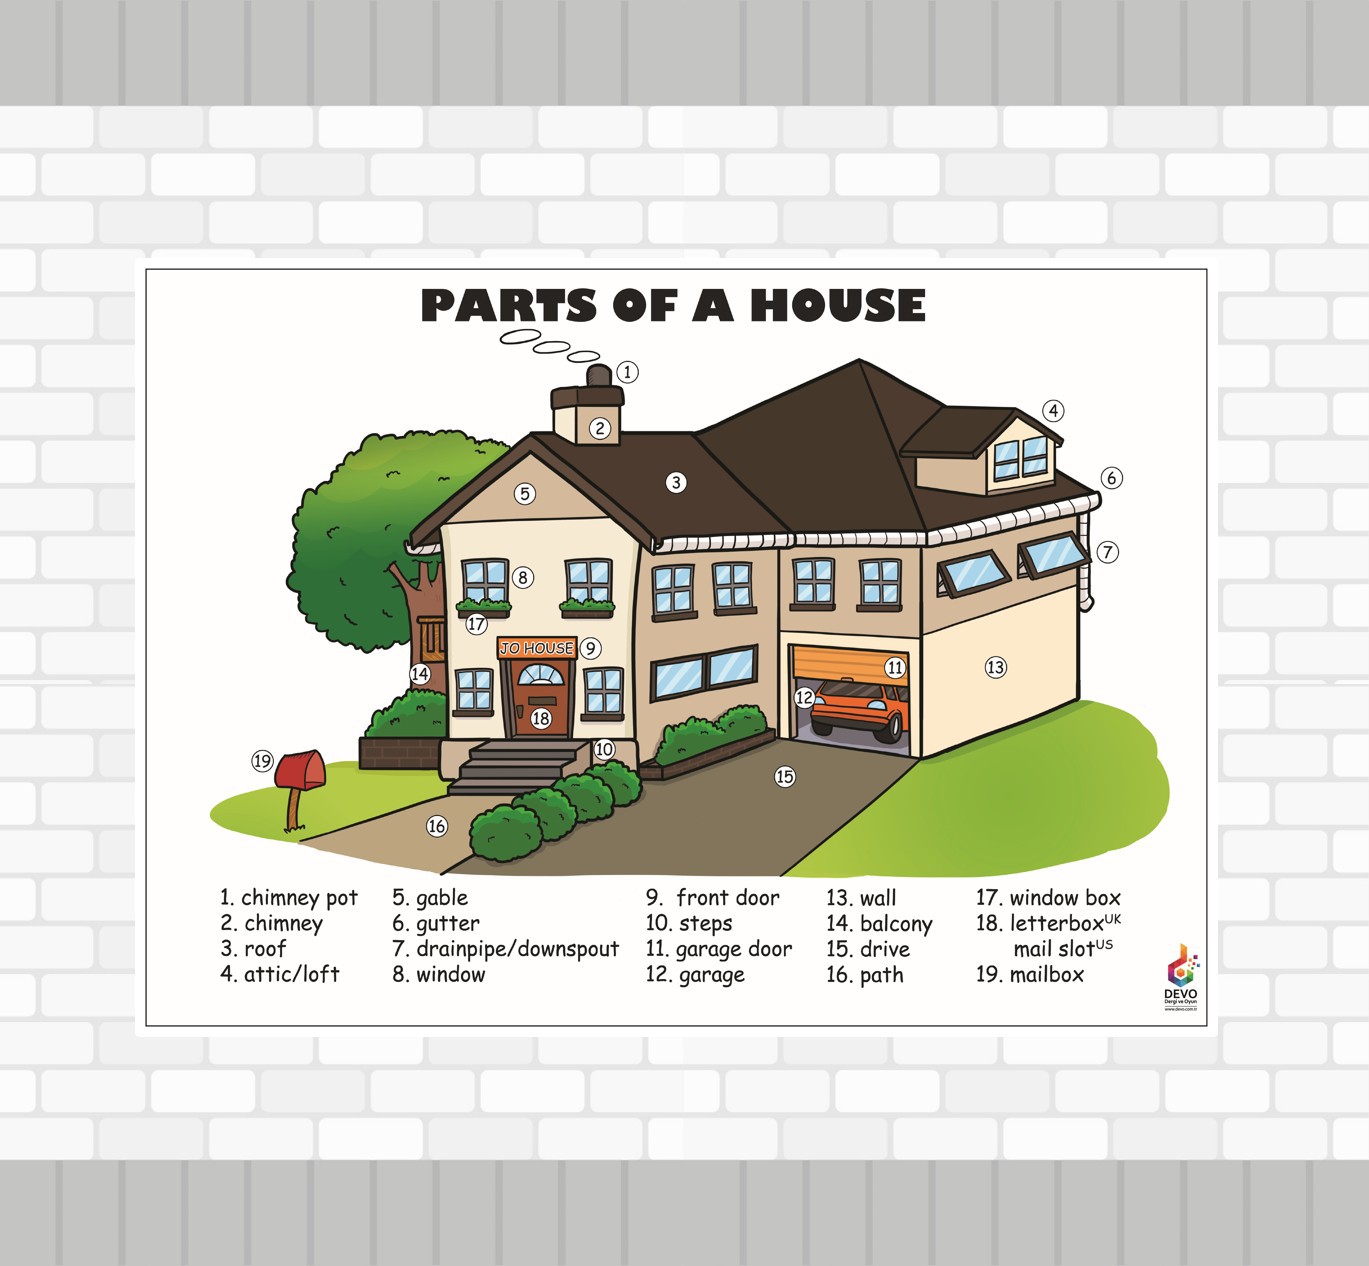 Parts Of a House Poster - Evin Bölümleri Posteri